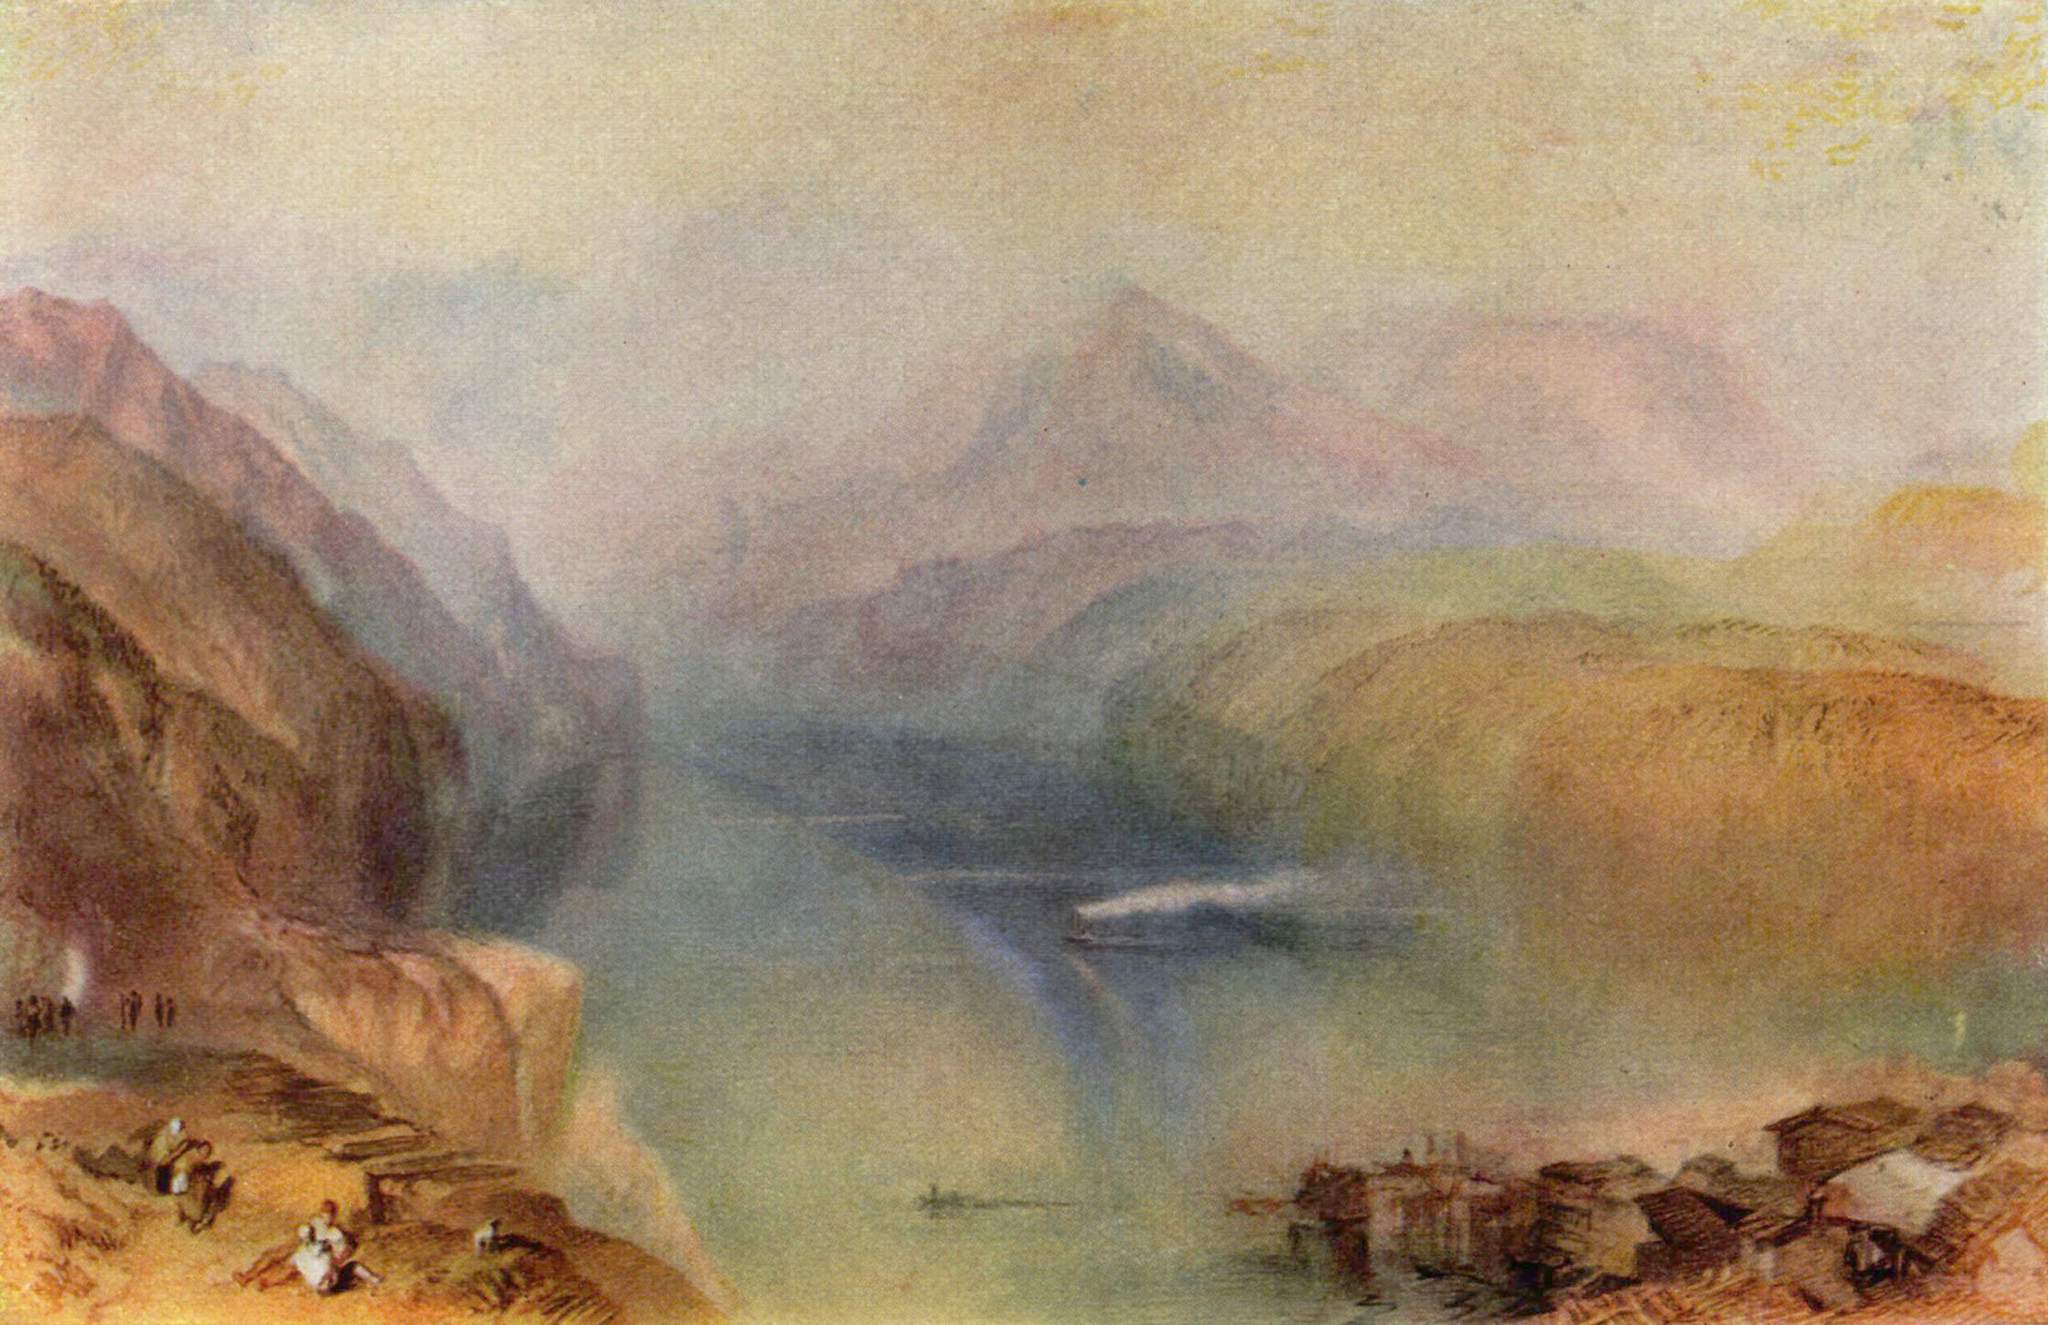 Lake Lucerne (1802).